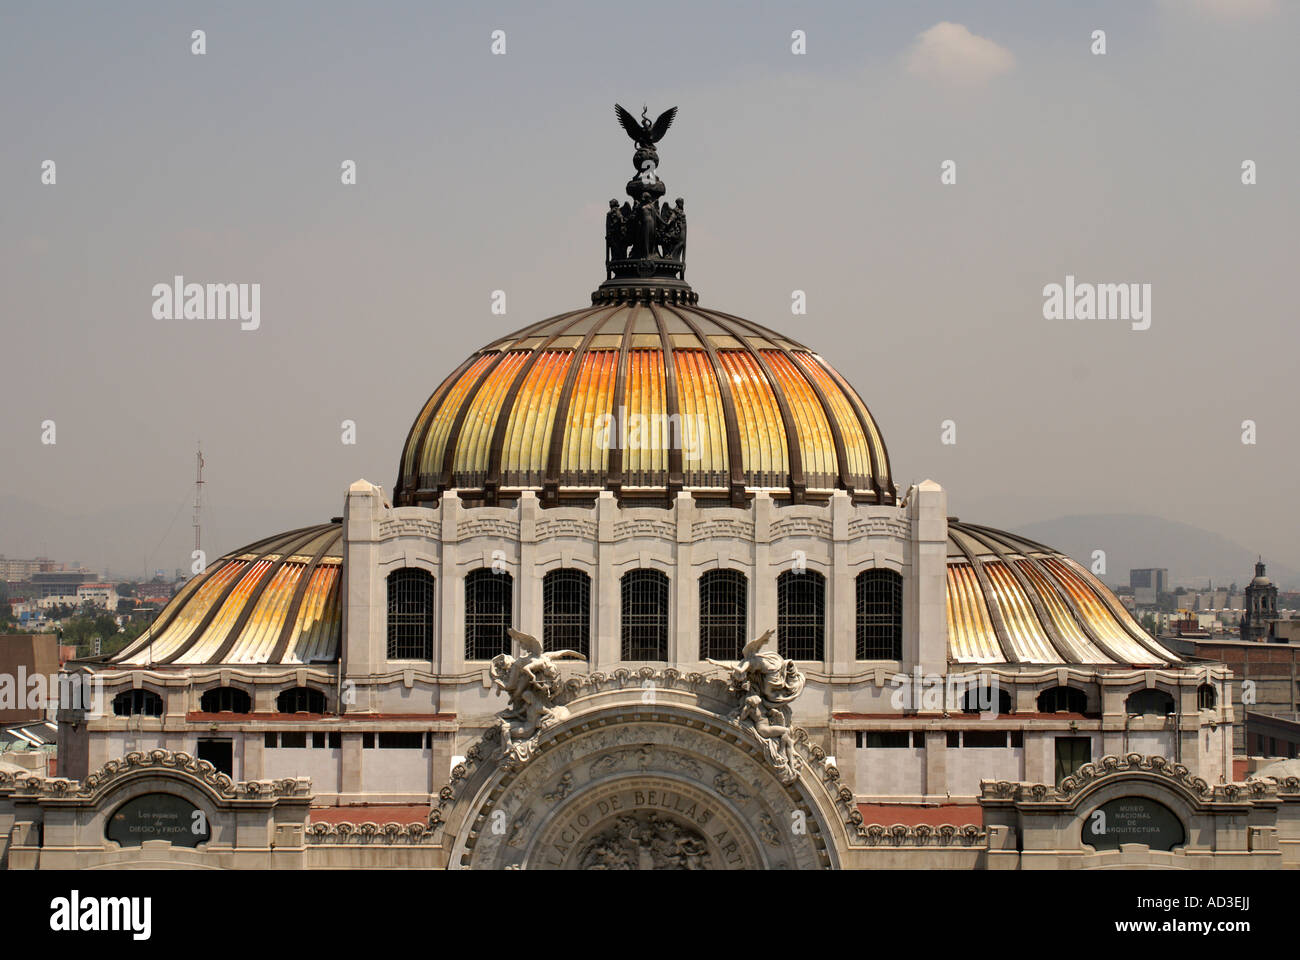 Dome of the Palacio de Bellas Artes or Palace of Fine Arts, Mexico City Stock Photo